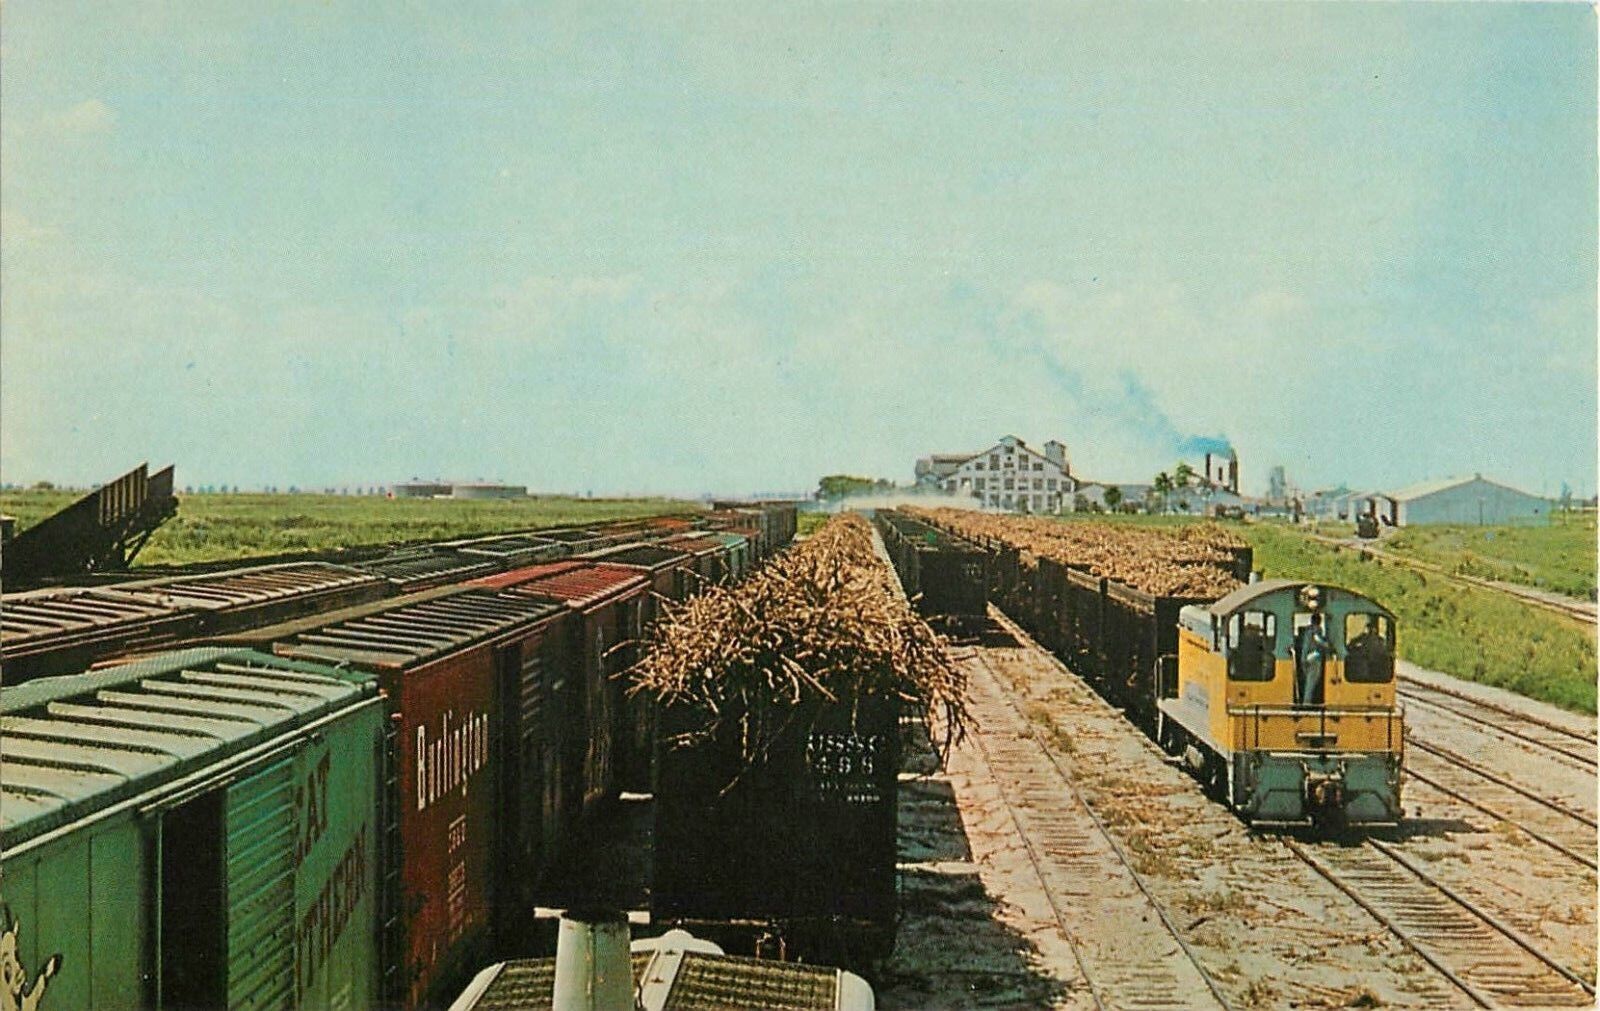 c1950s Trainload Of Sugar Cane, US Sugar CO, Clewiston, Florida Postcard